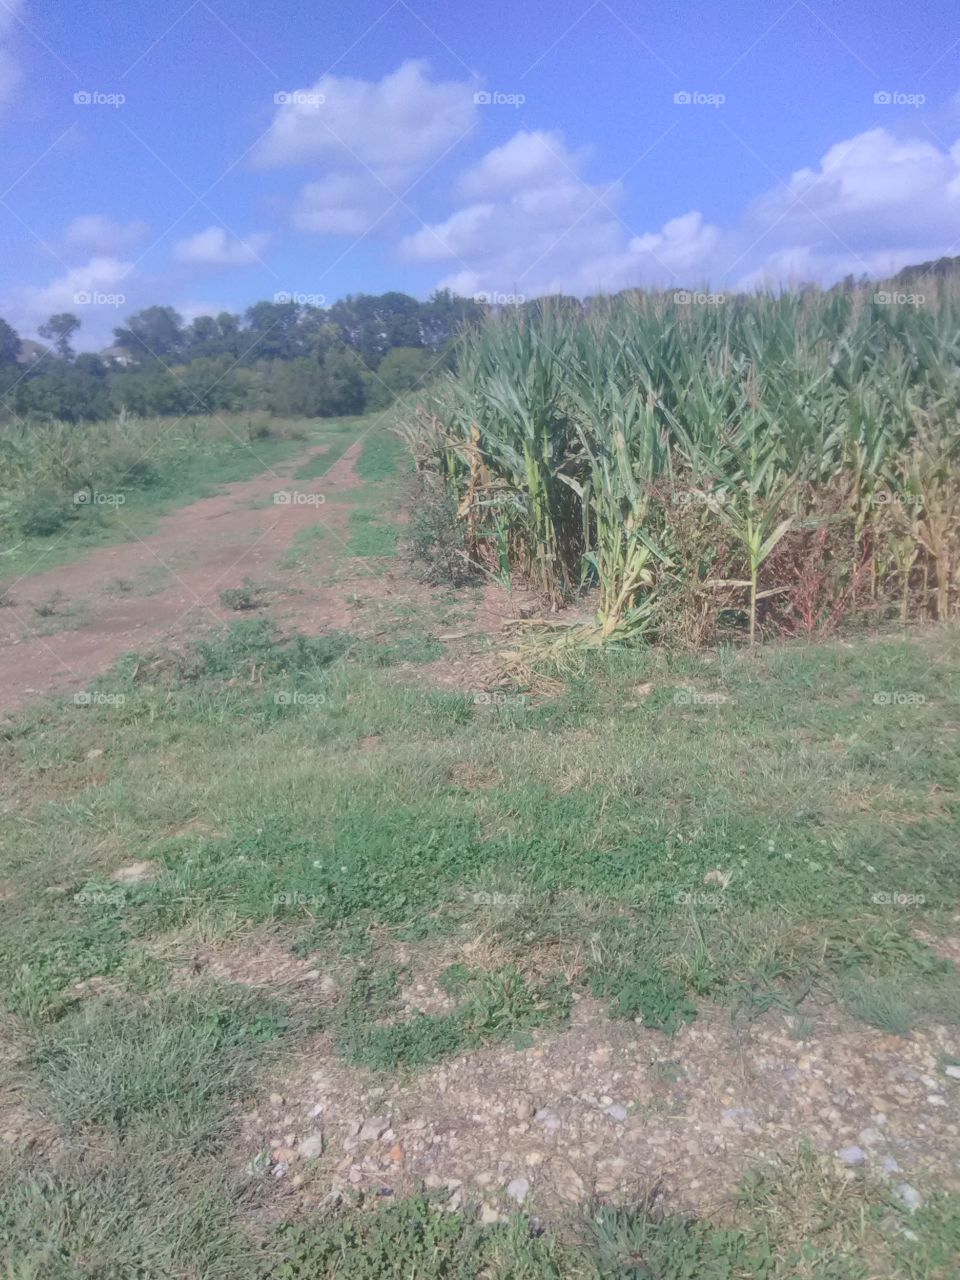 corn field
corn field
outdoors
corn maze

outdoors corn field
outdoors corn maze field